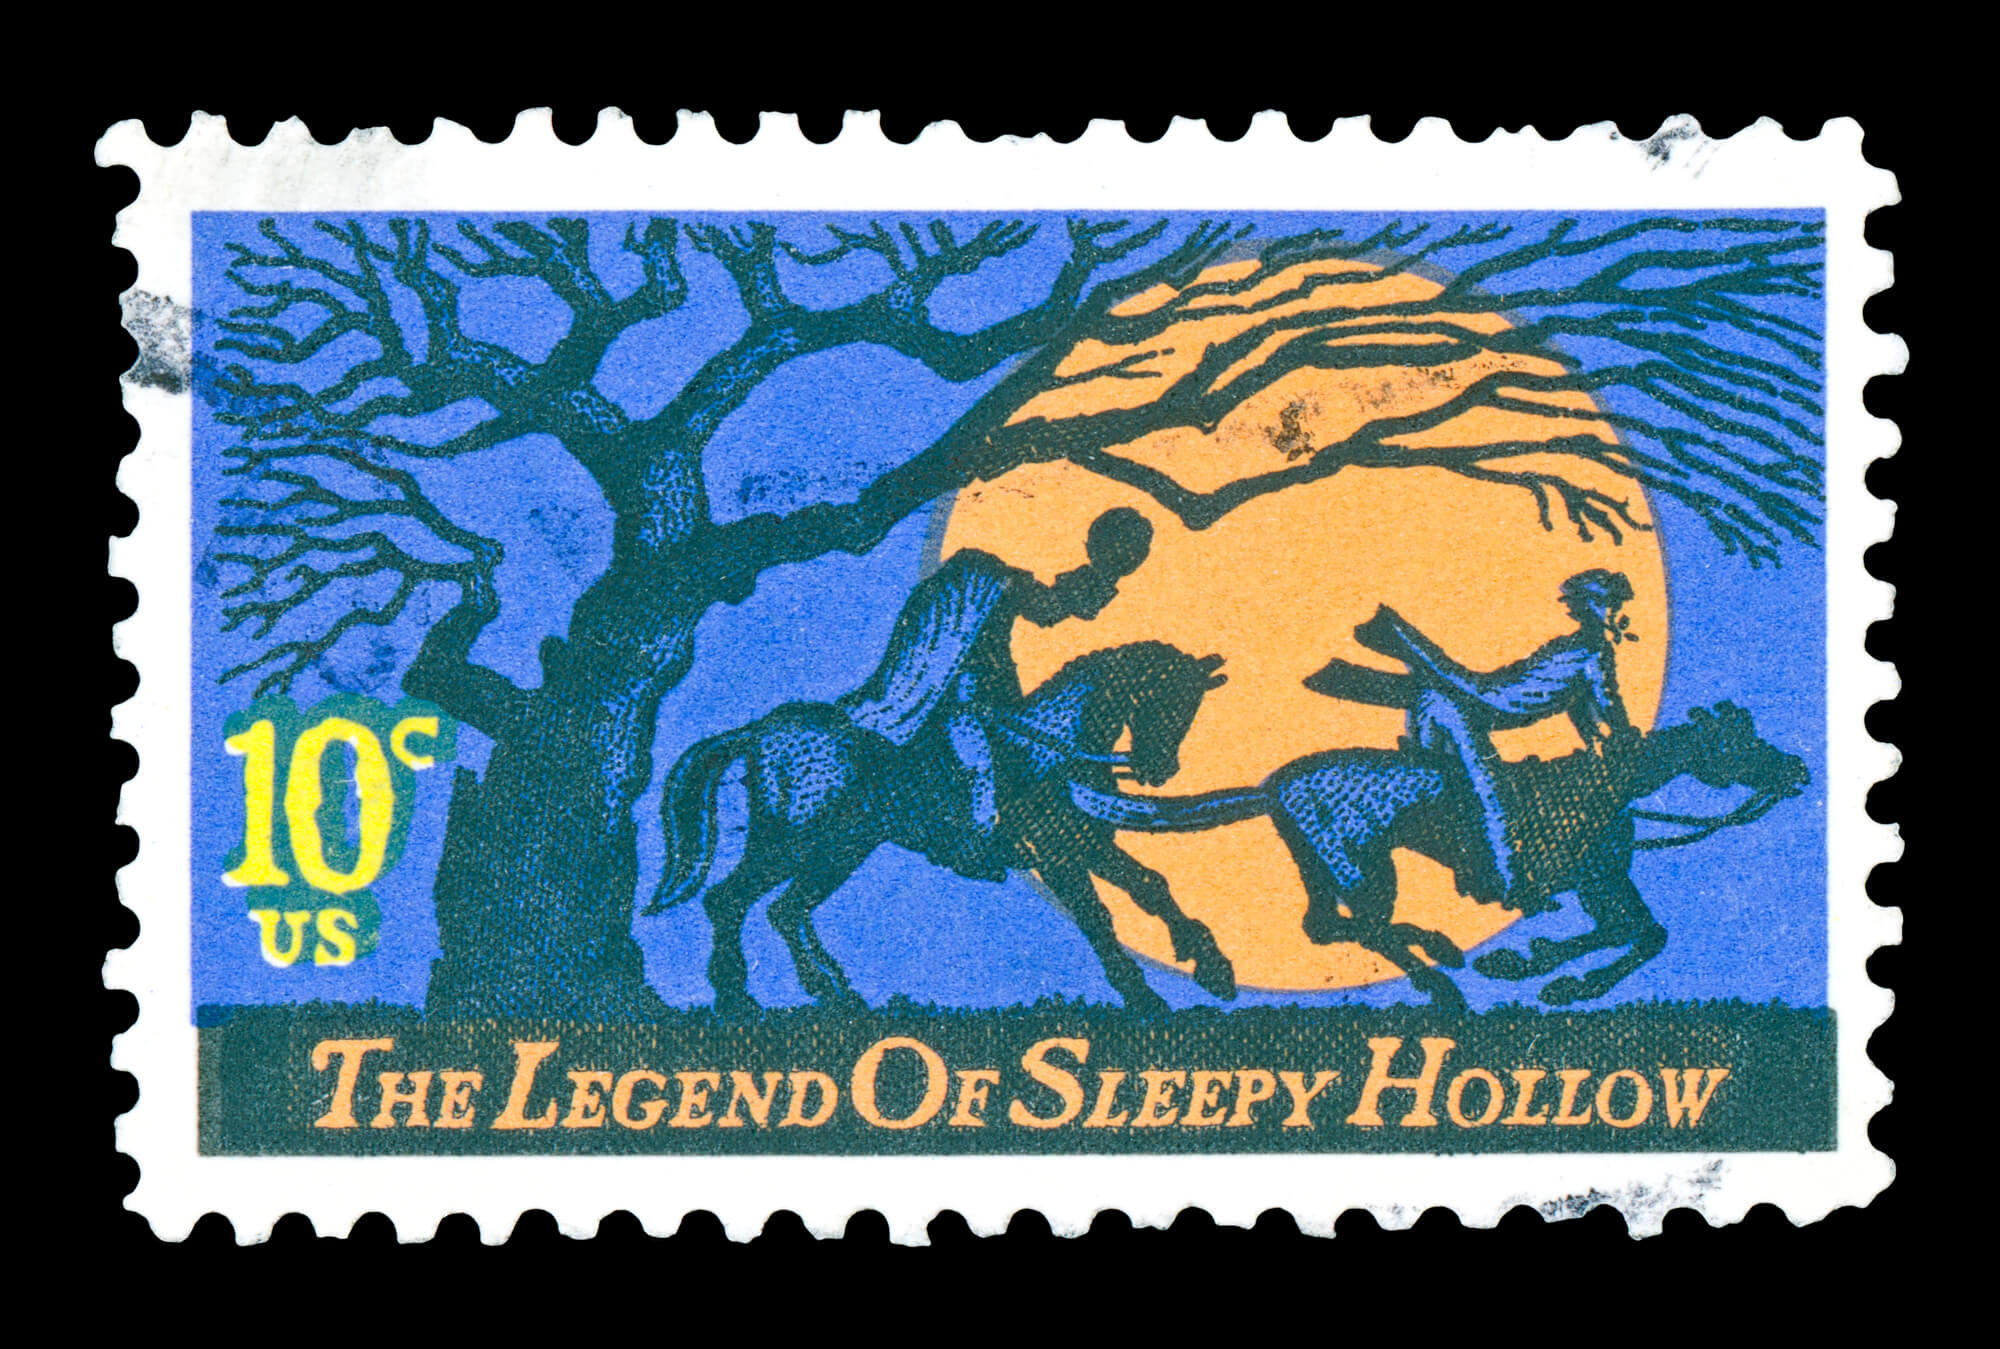 1974 Legend of Sleepy Hollow stamp